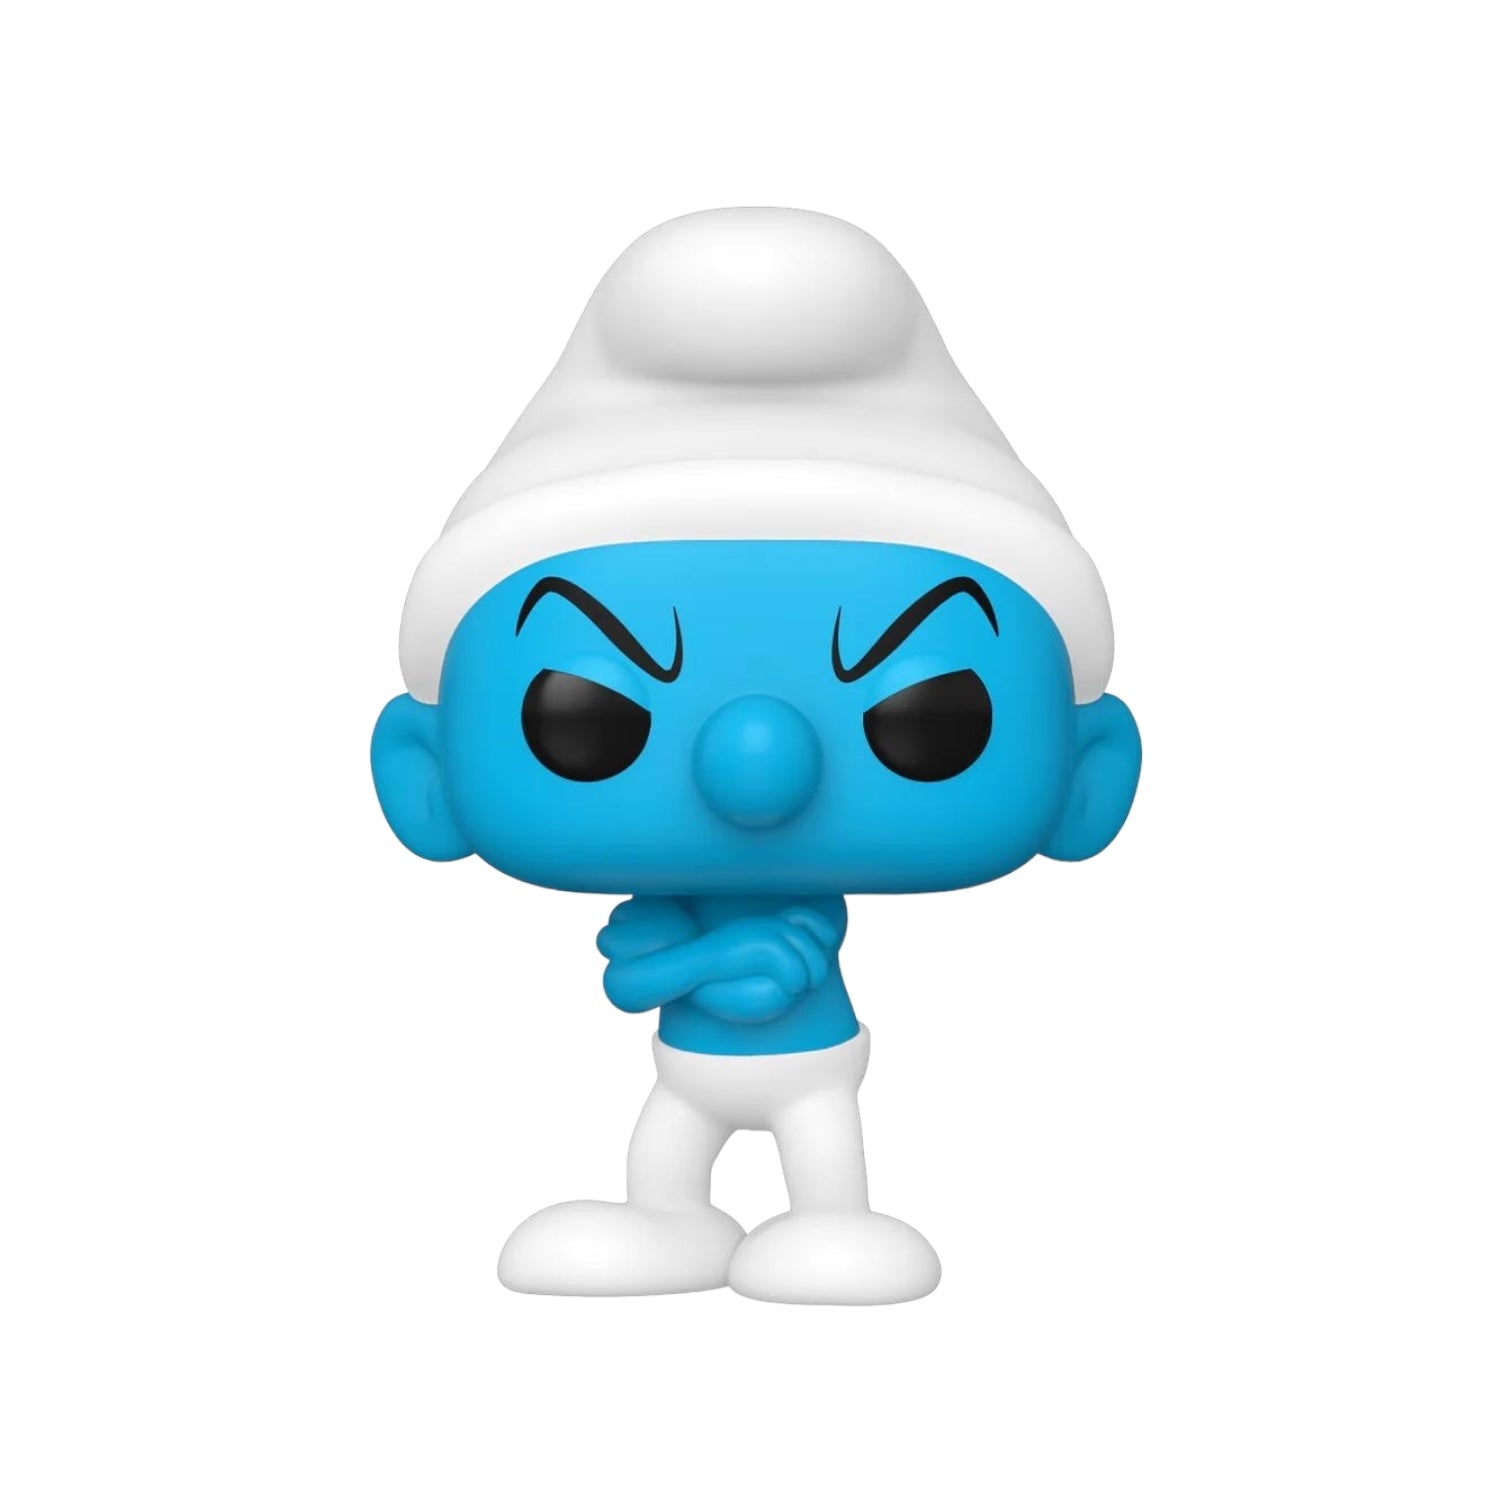 Grouchy Smurf #1518 Funko Pop!  - The Smurfs - PREORDER